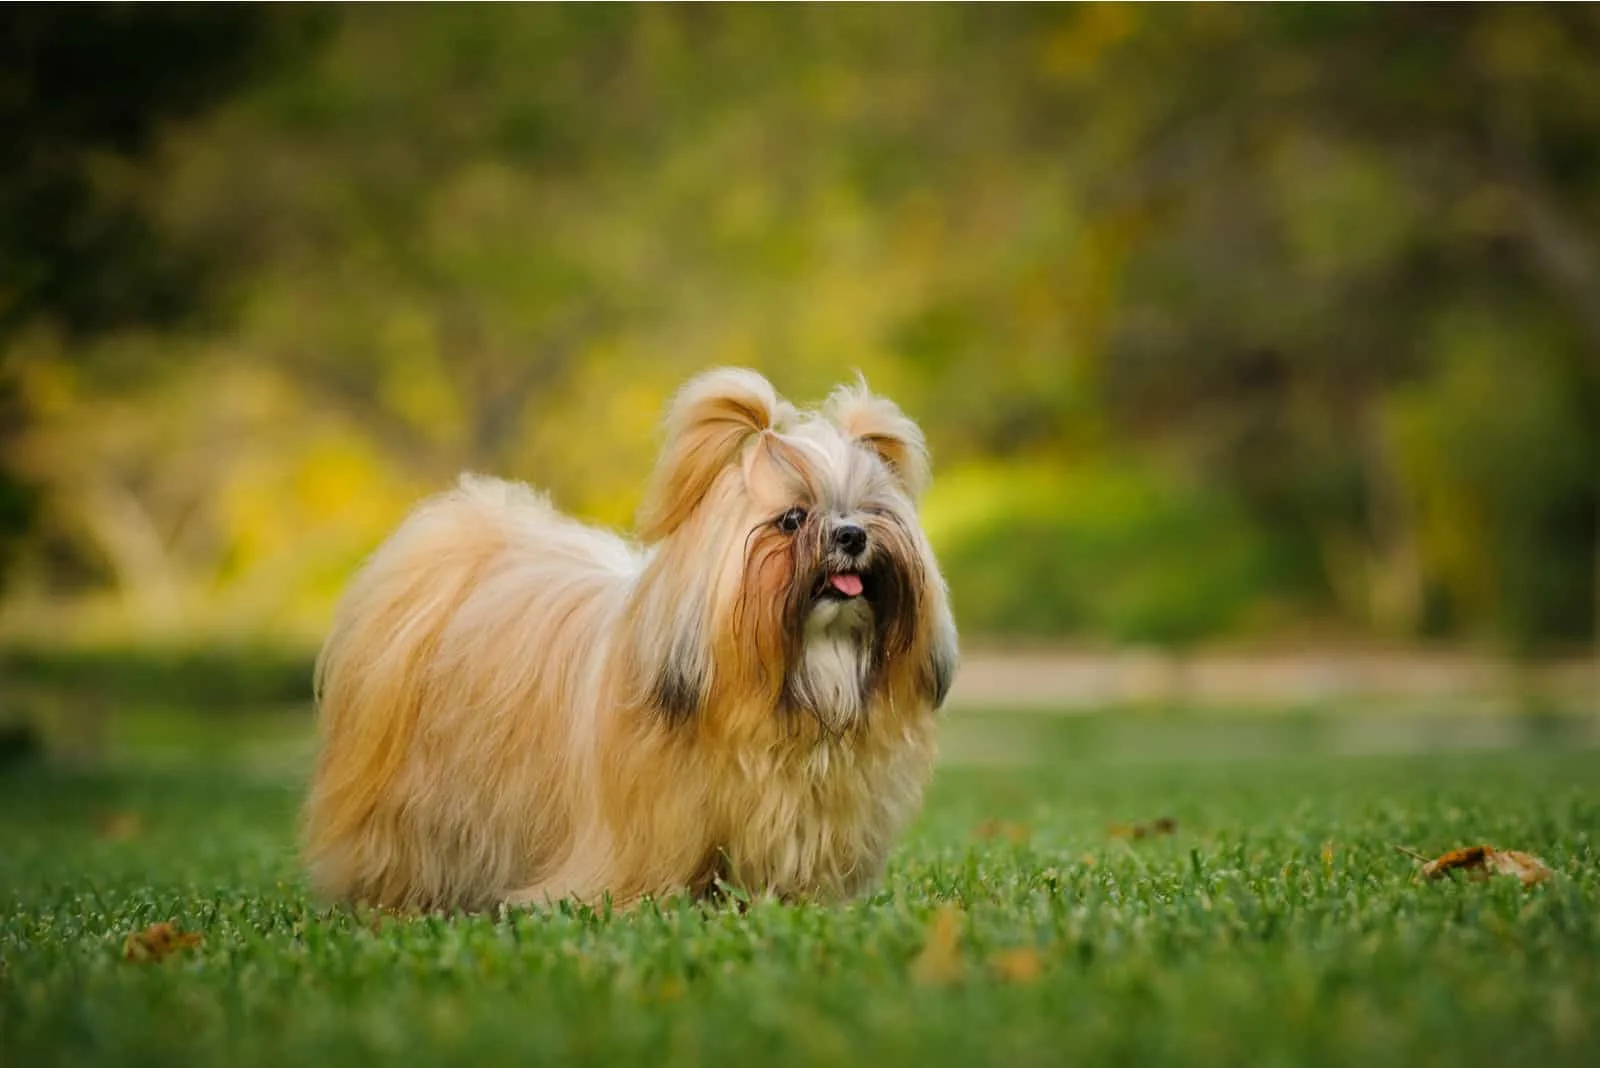 Shih Tzu dog with long groomed hair